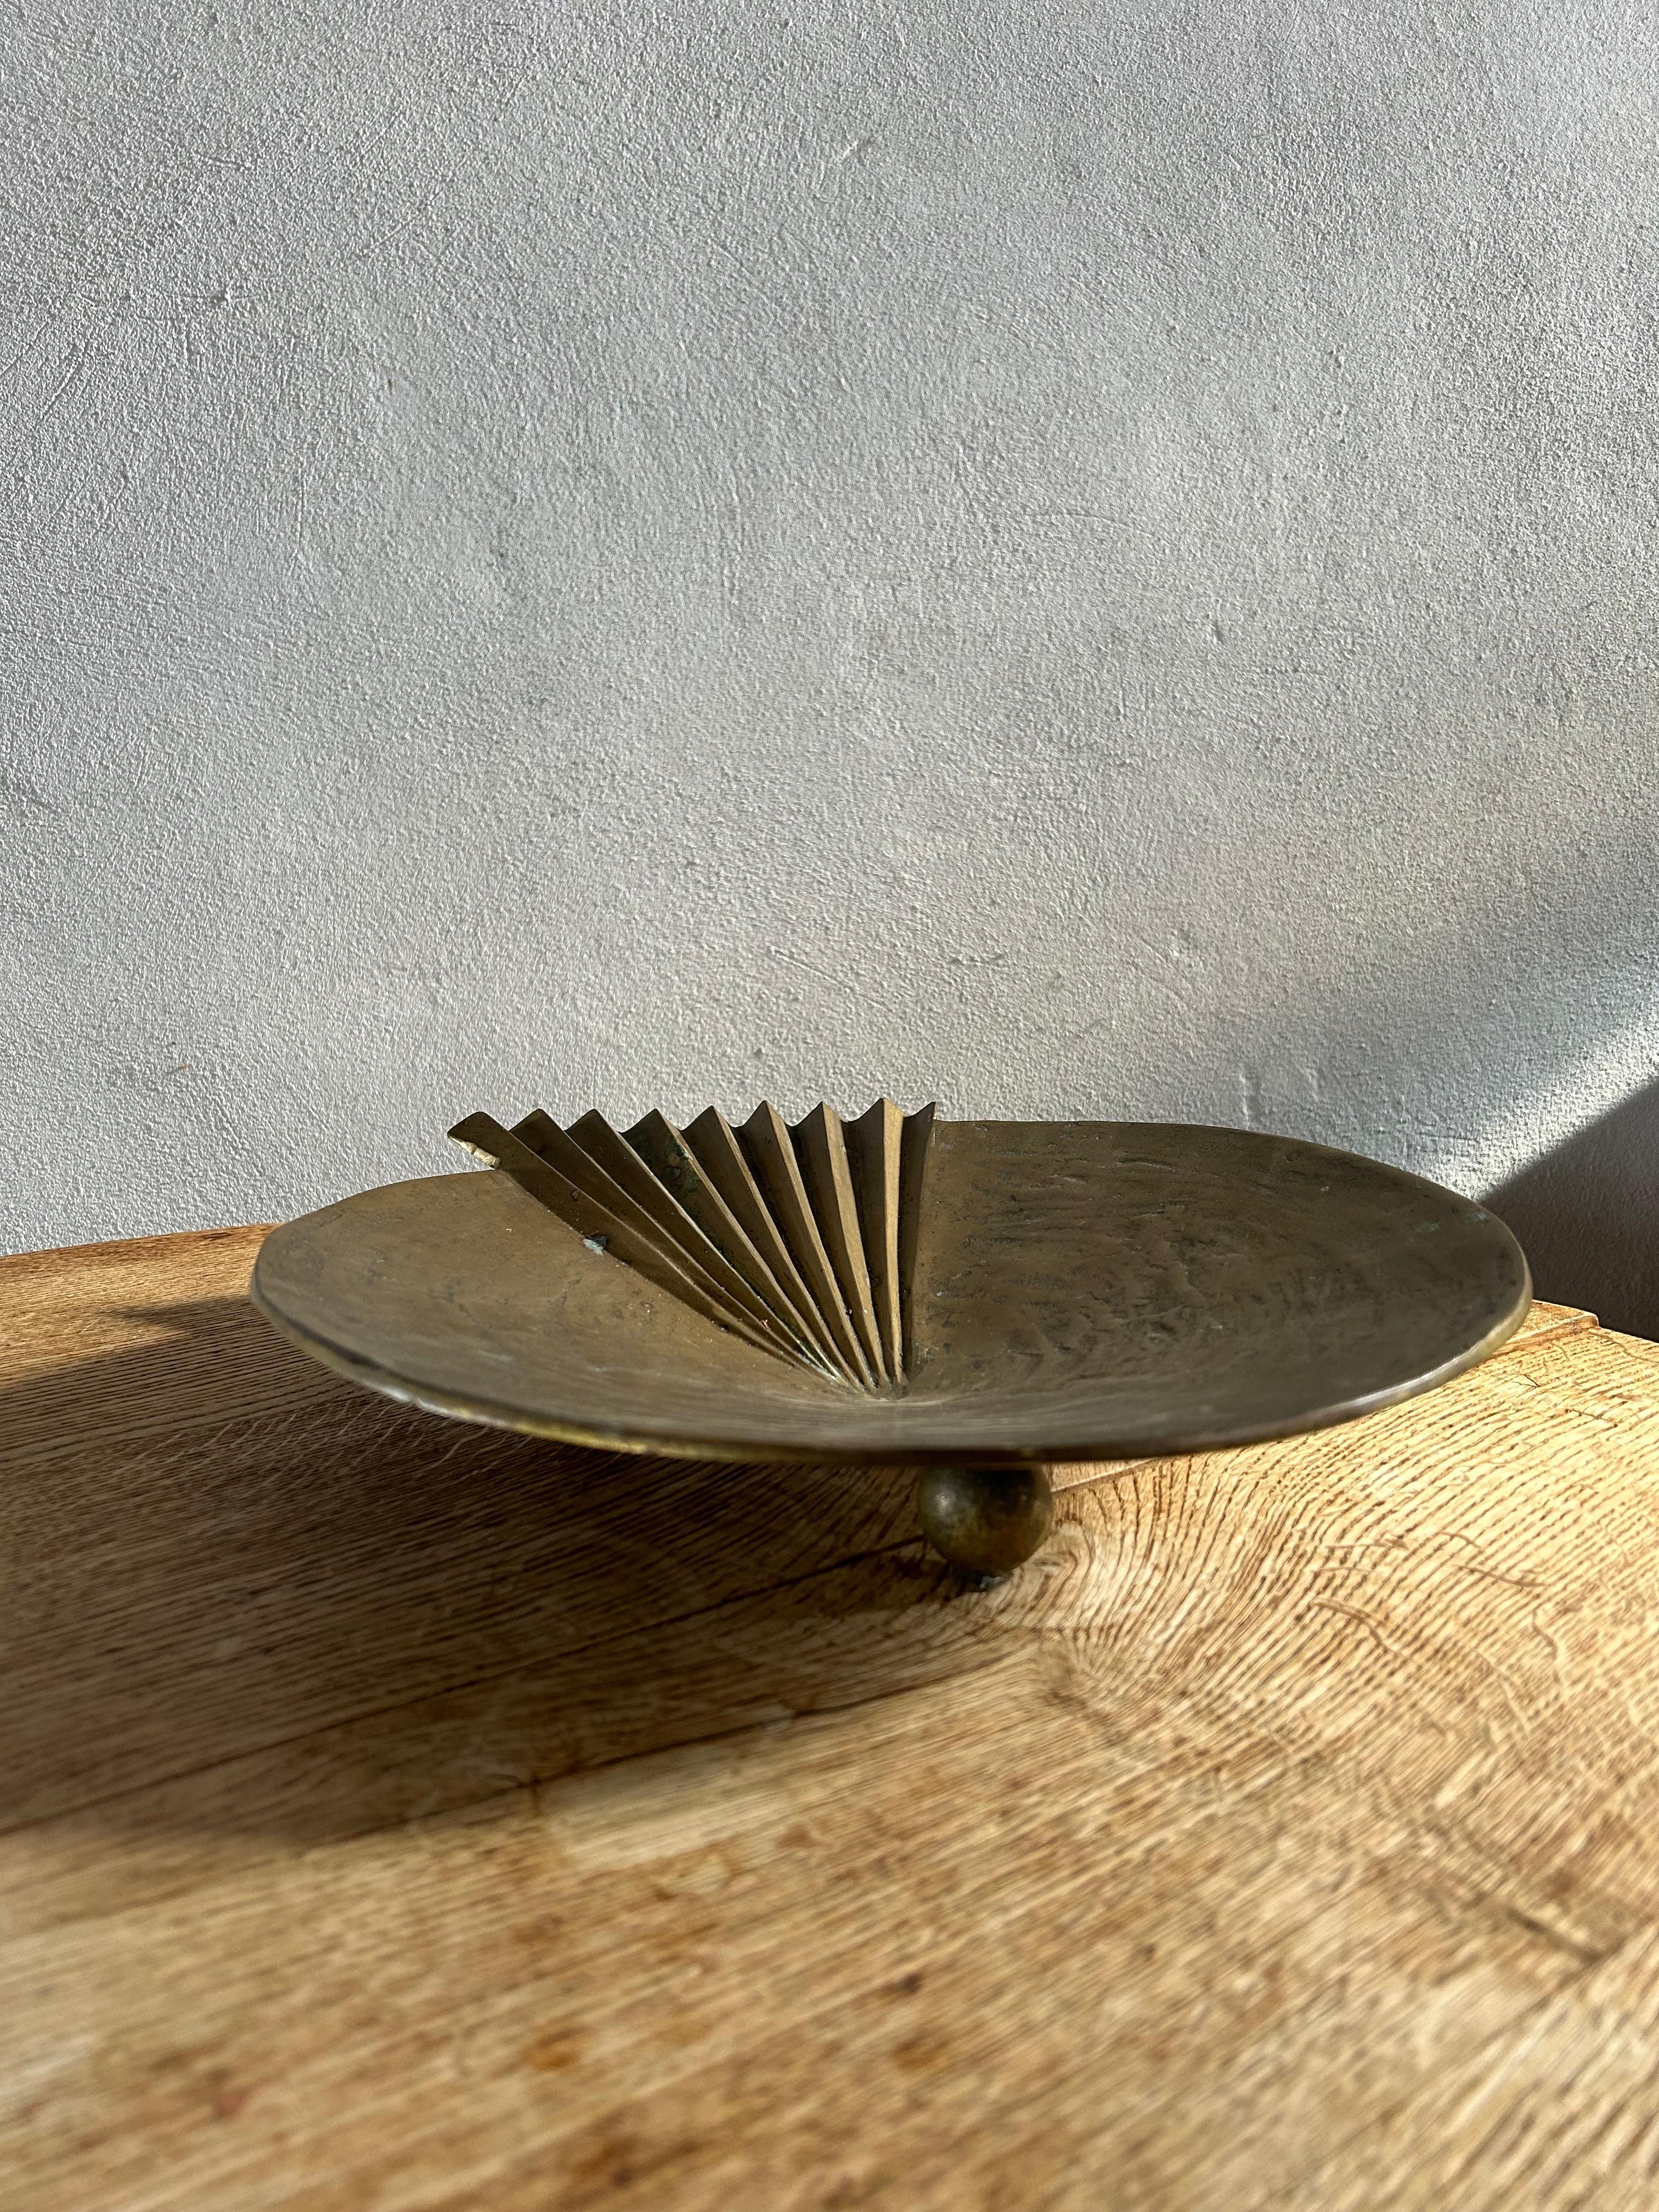 Decorative Italian Solid Bronze Dish, Italy 1970’s For Sale 2